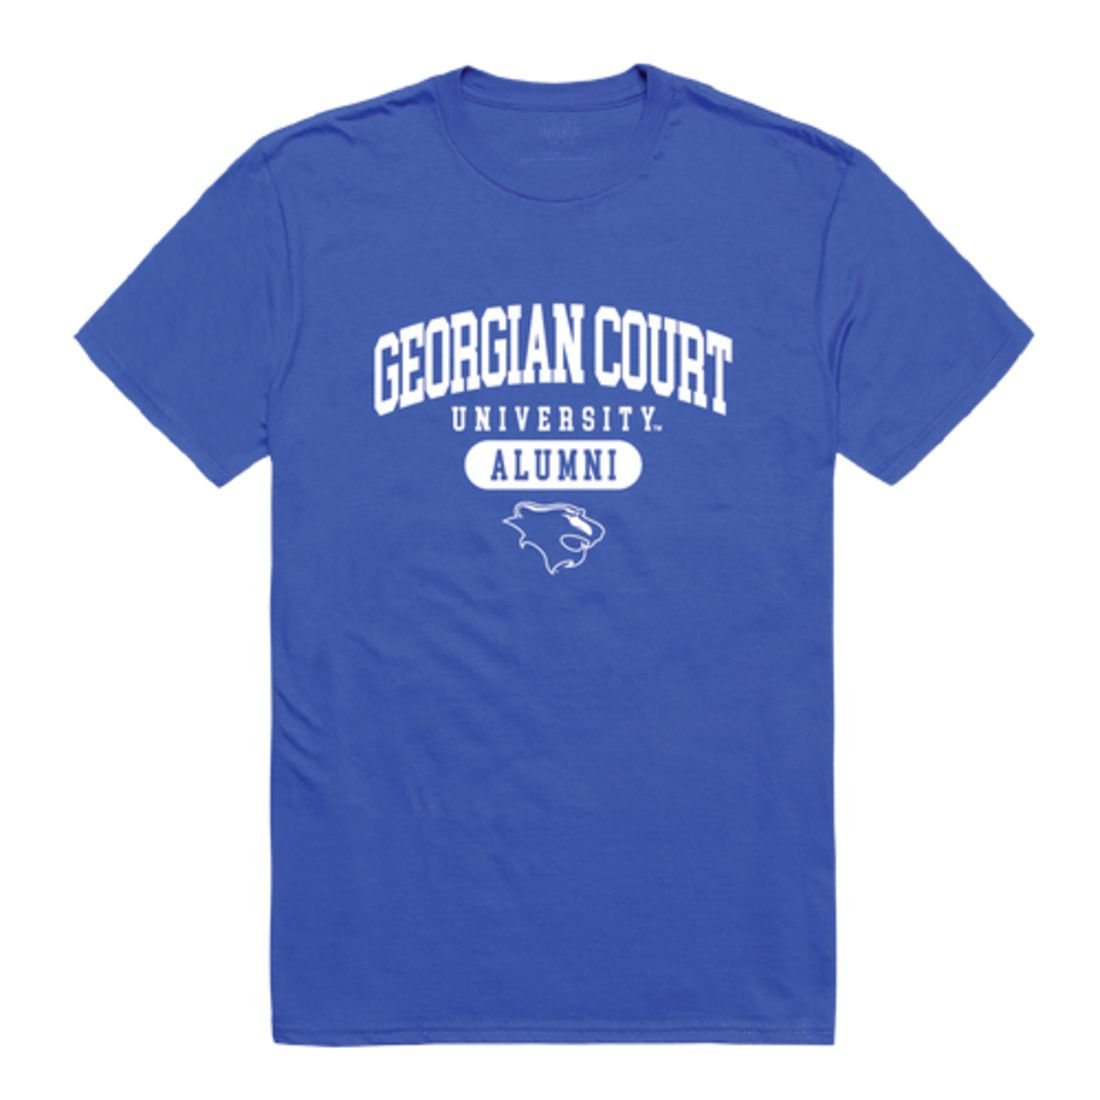 Georgian Court University Lions Alumni T-Shirt Tee